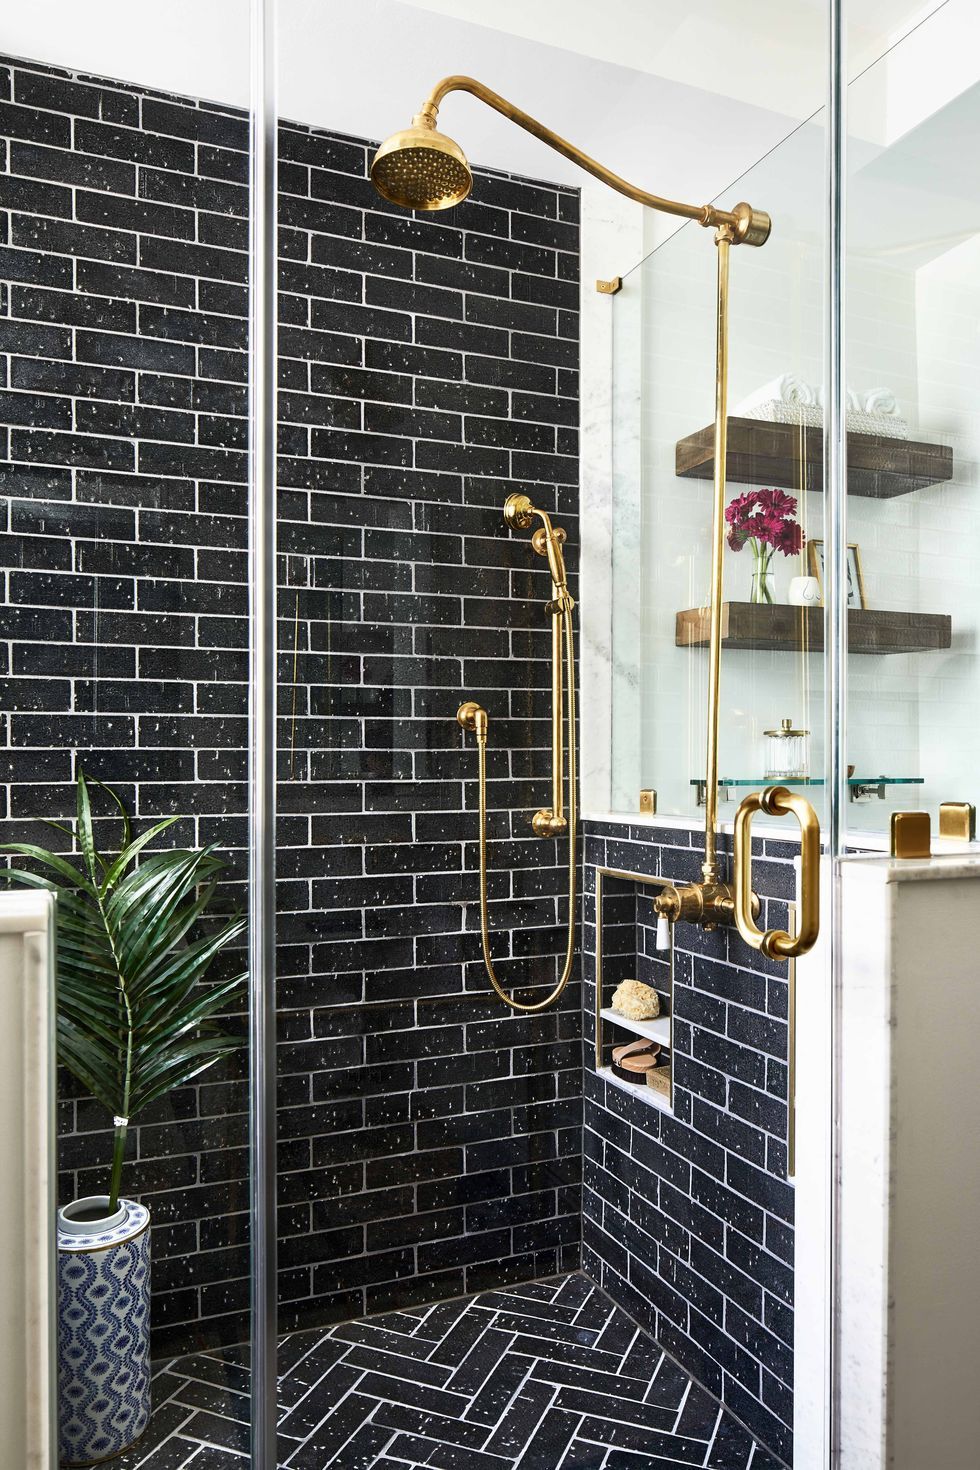 Creative Bathroom Tile Design Ideas, Tile Pattern Ideas For Bathroom